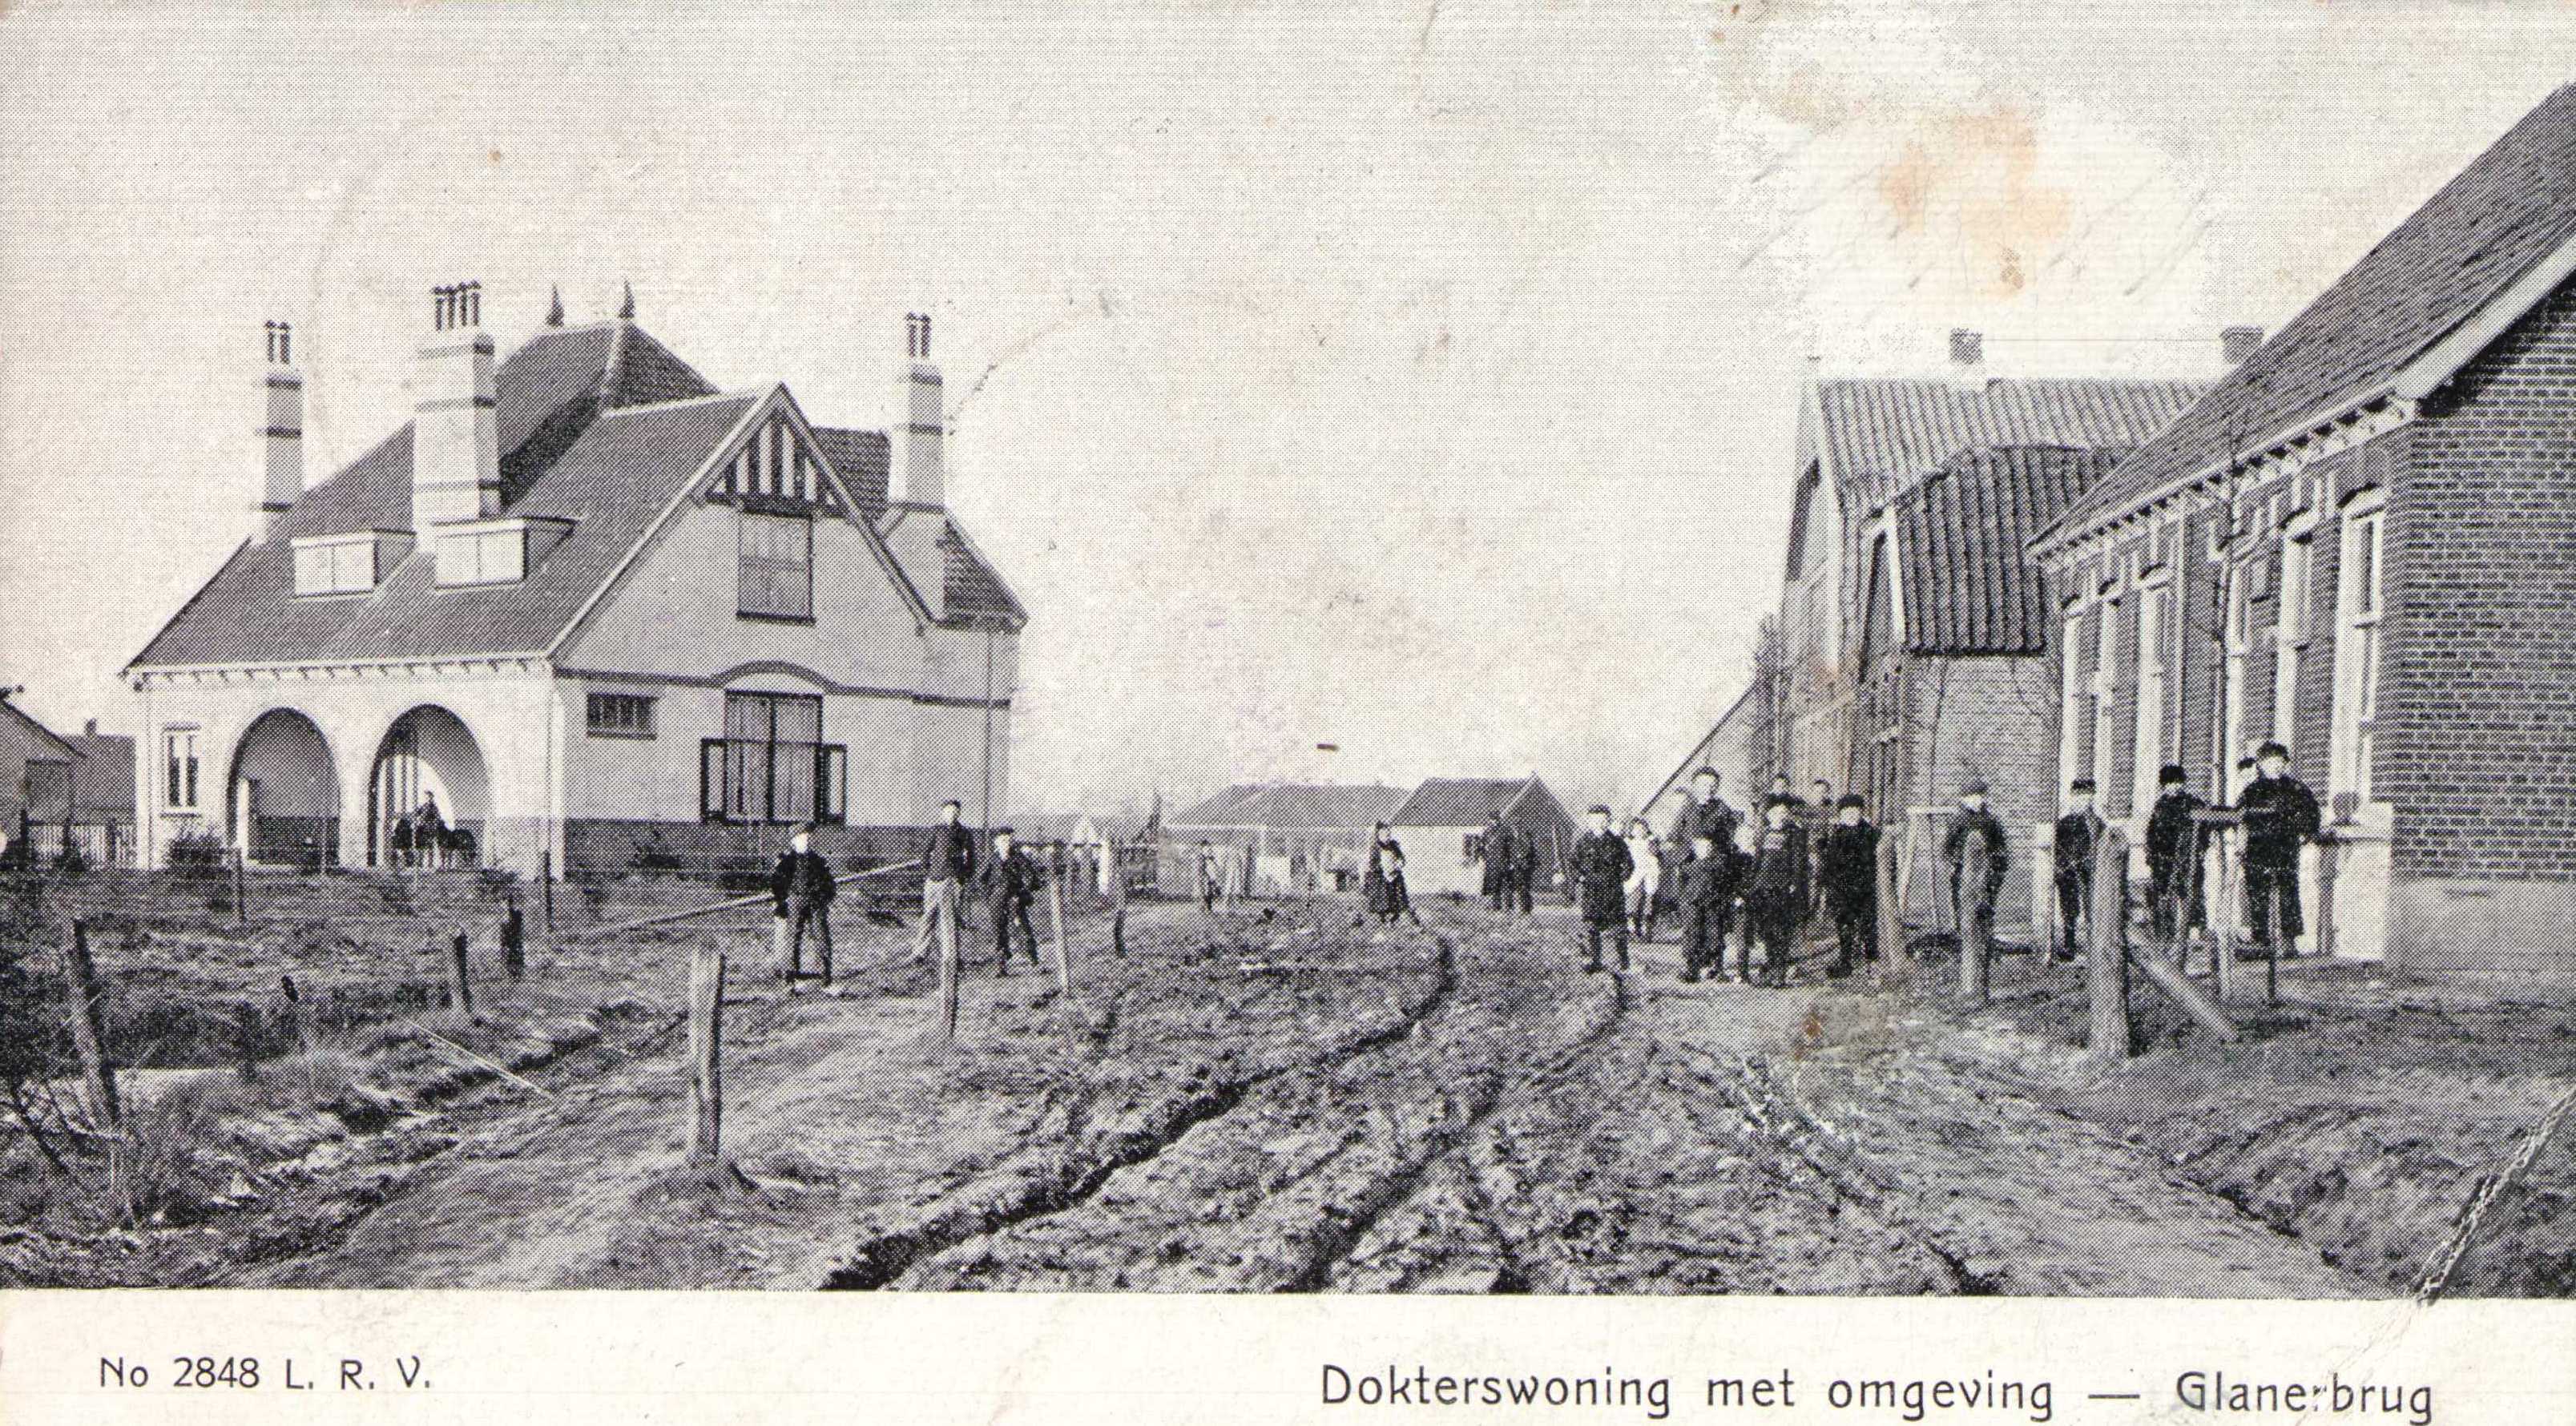 Dokterswoning-Glanerbrug-1907-9b89379a.jpg